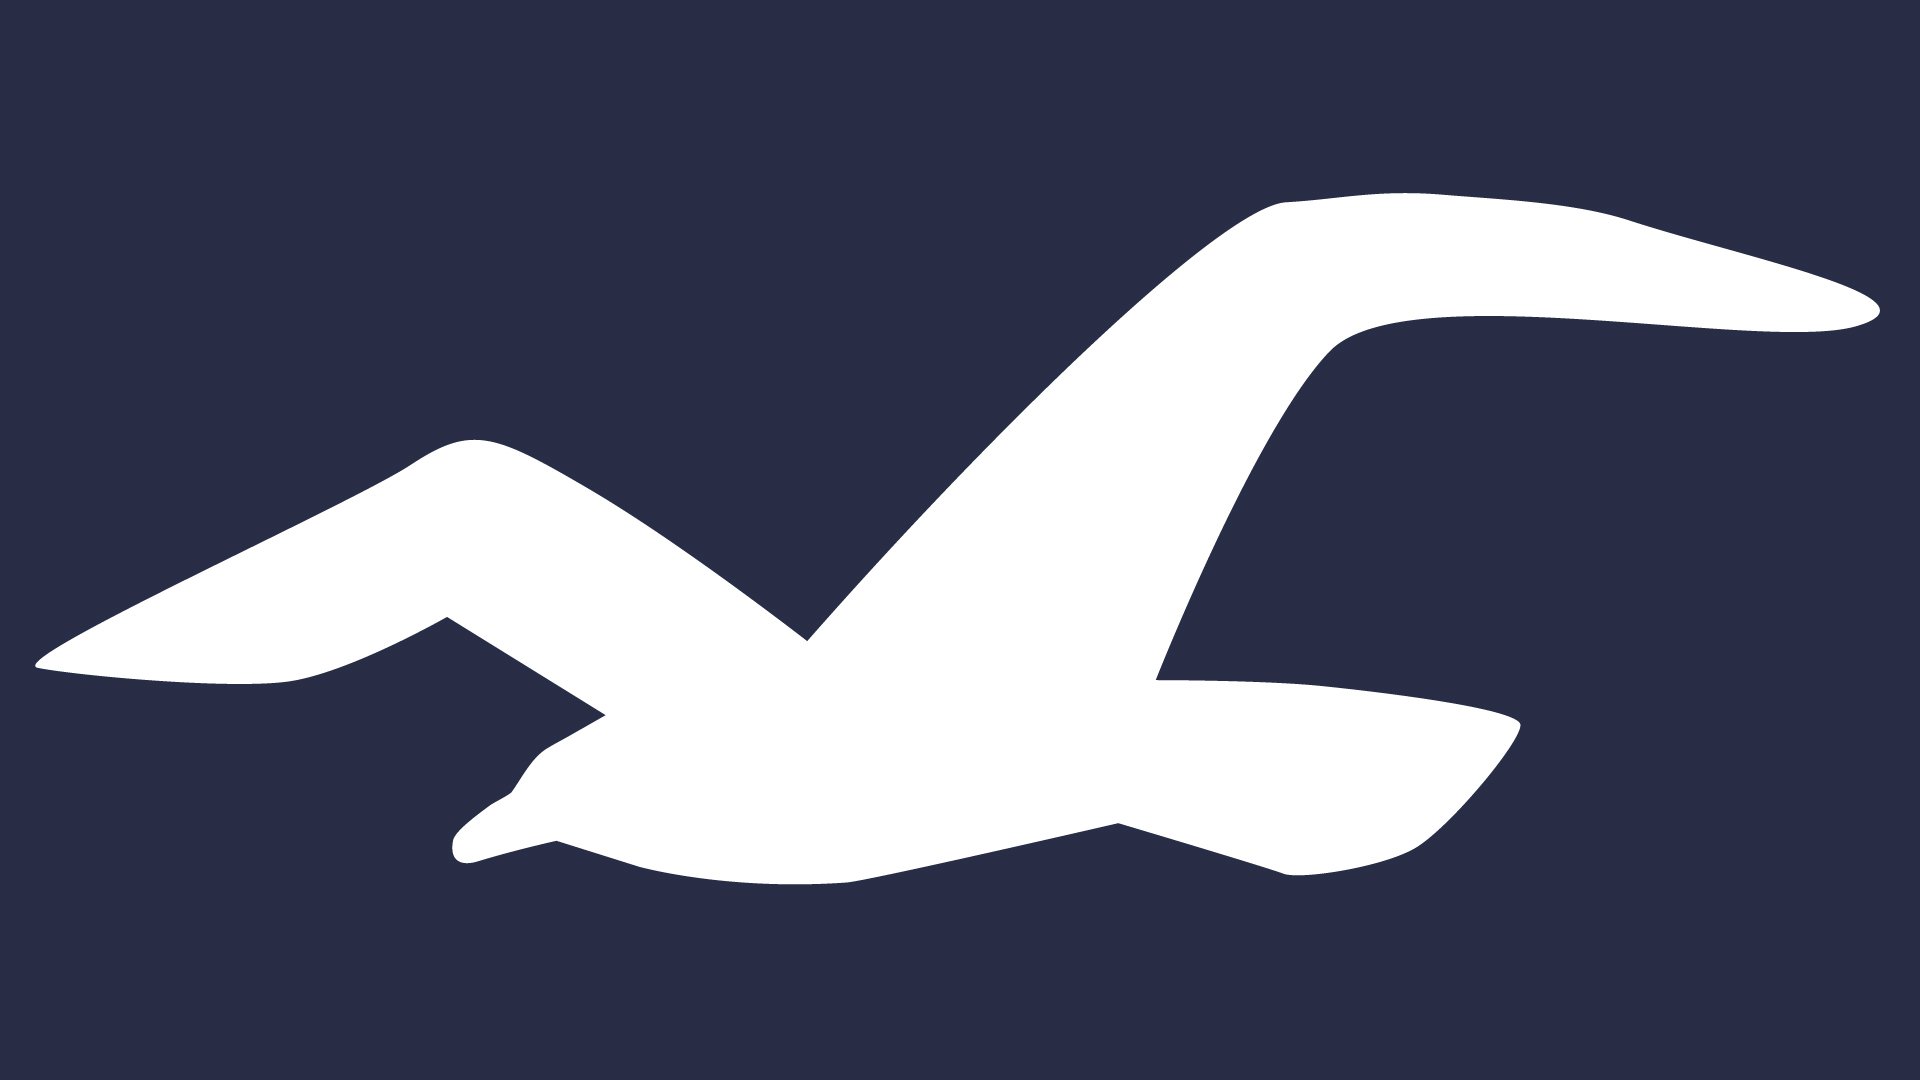 Hollister Logo Wallpapers